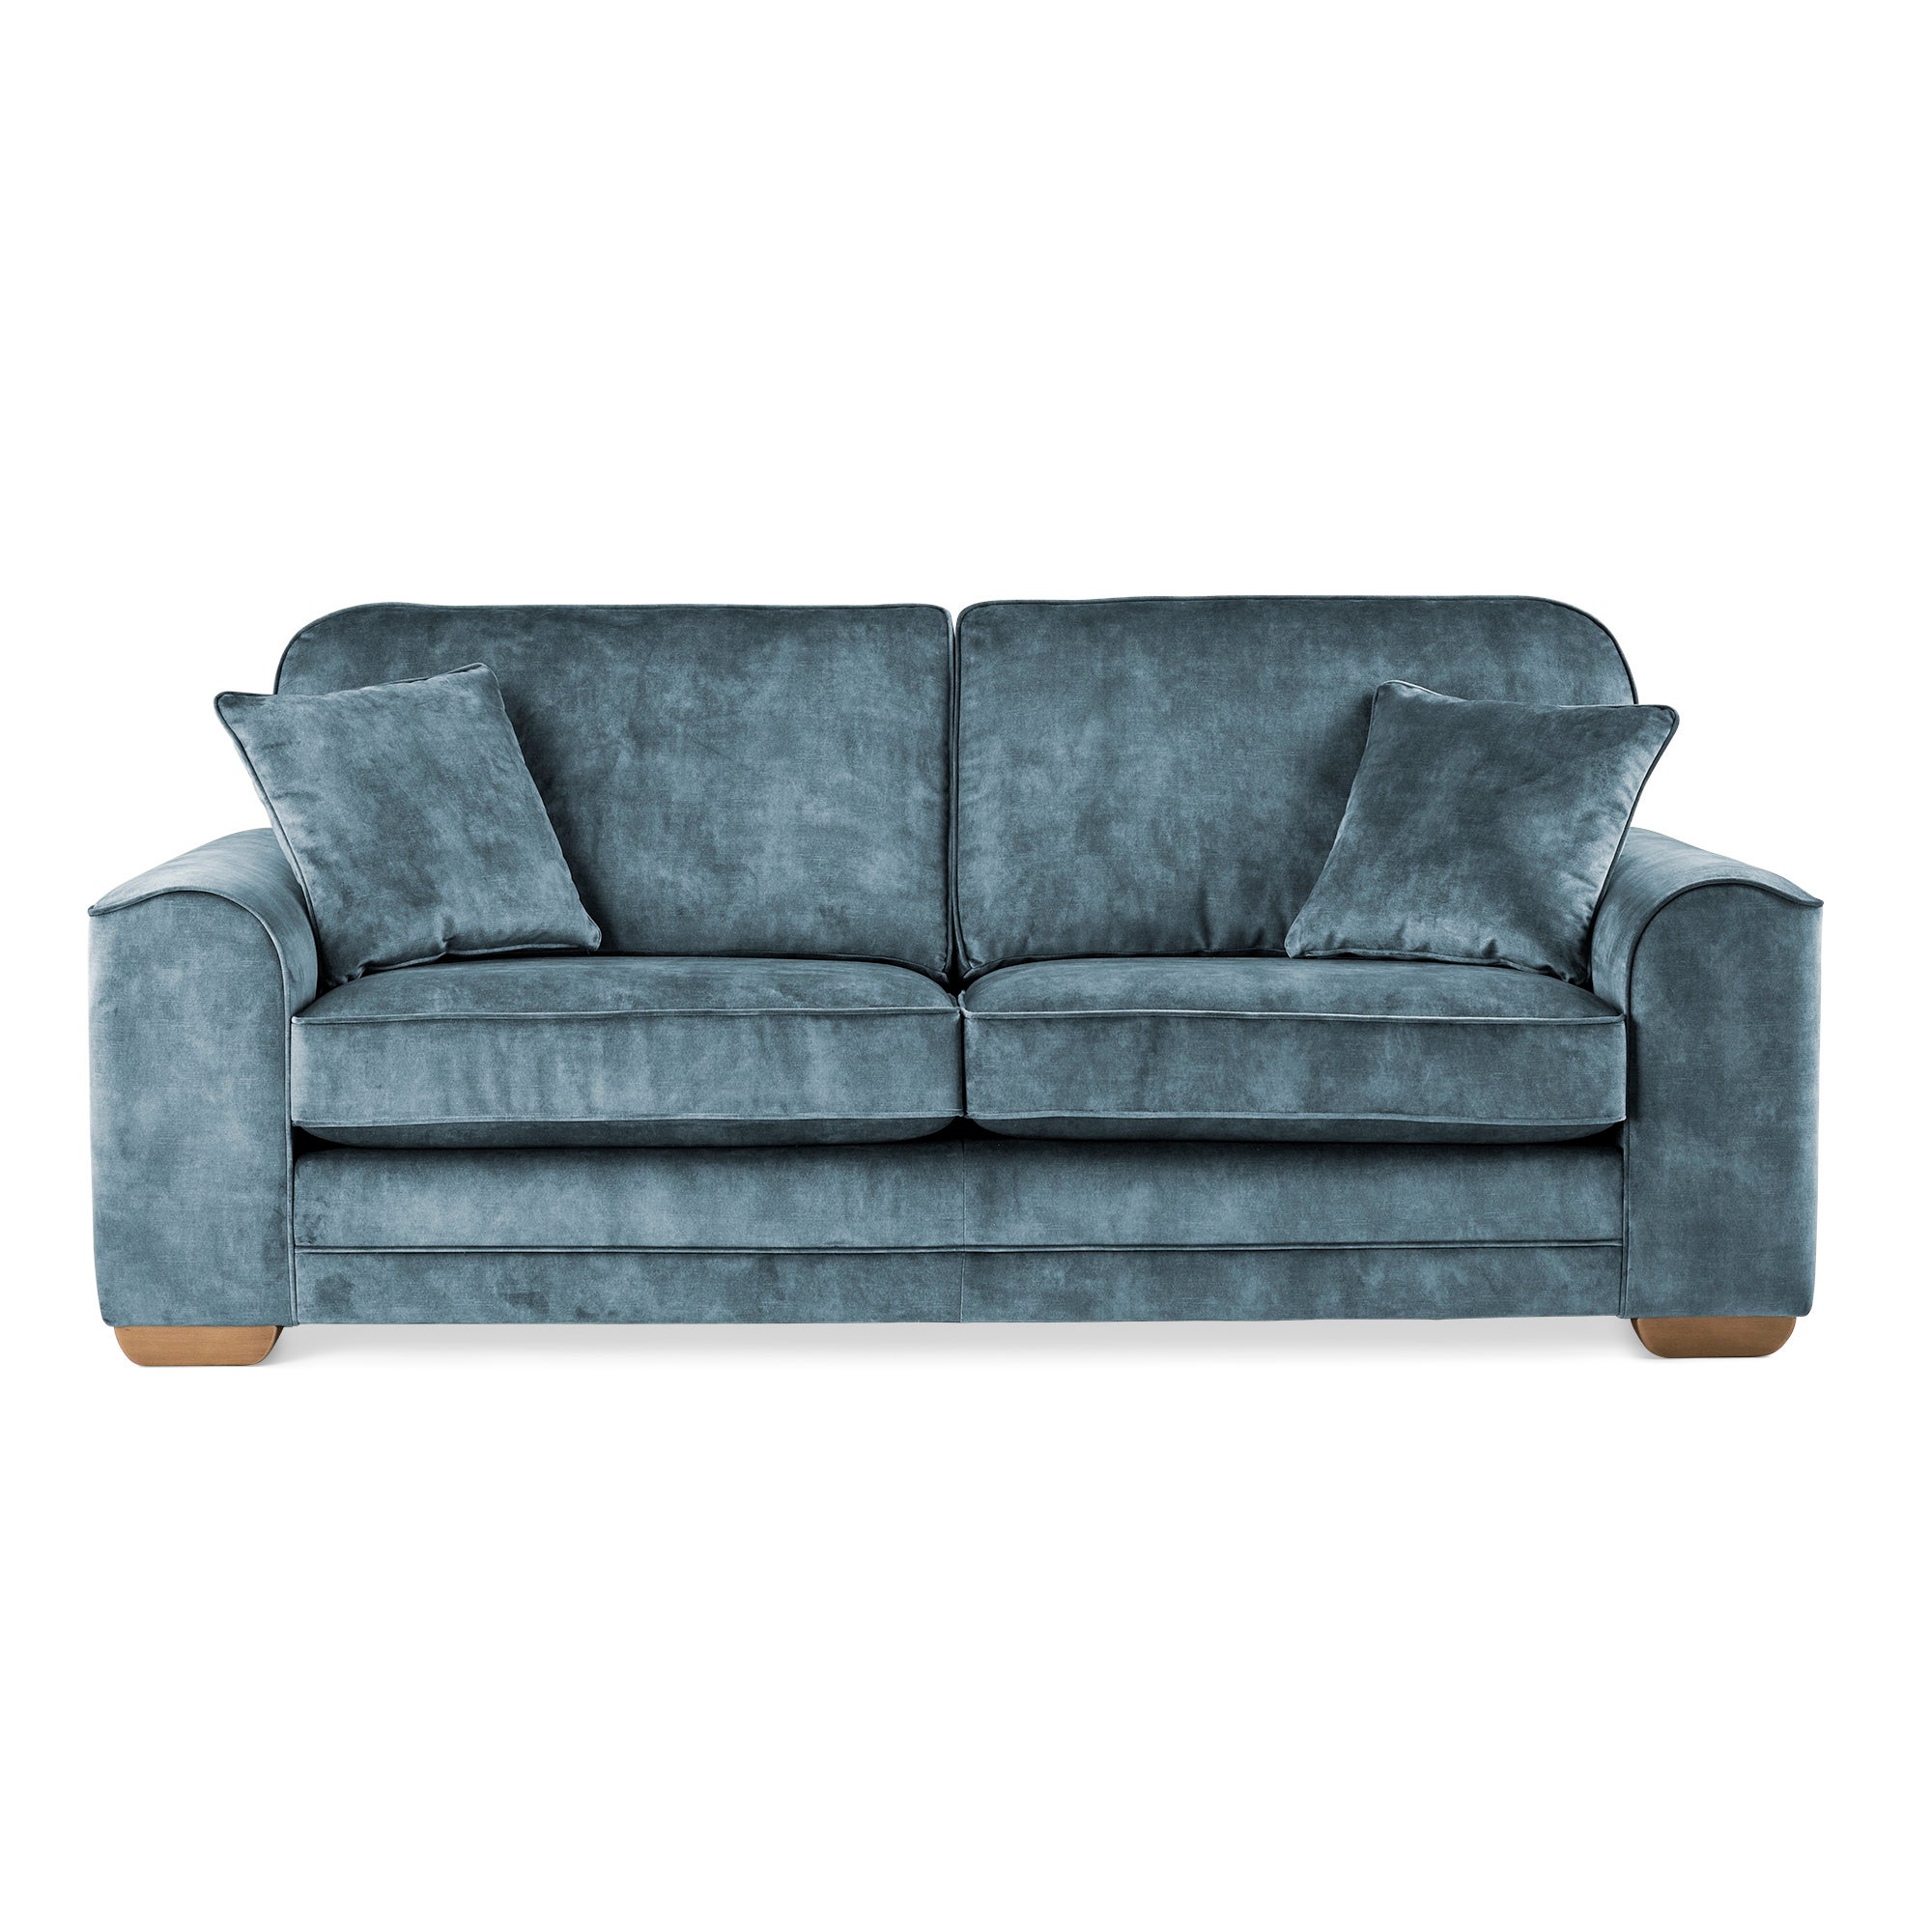 Morello 3 Seater Sofa | Dunelm